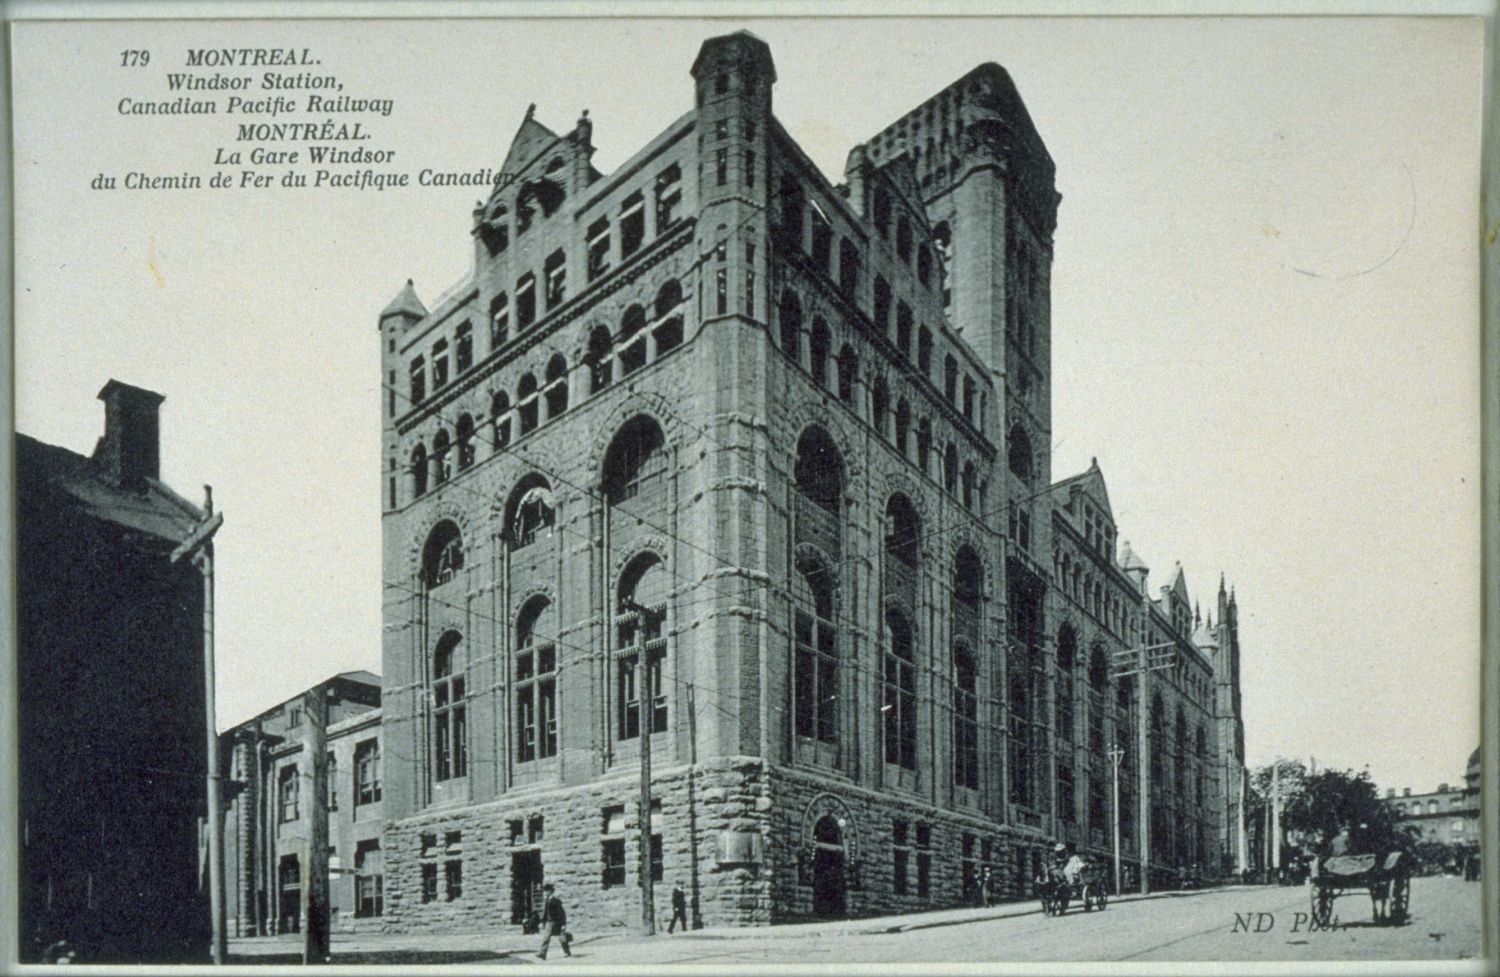 Windsor Station in 1889